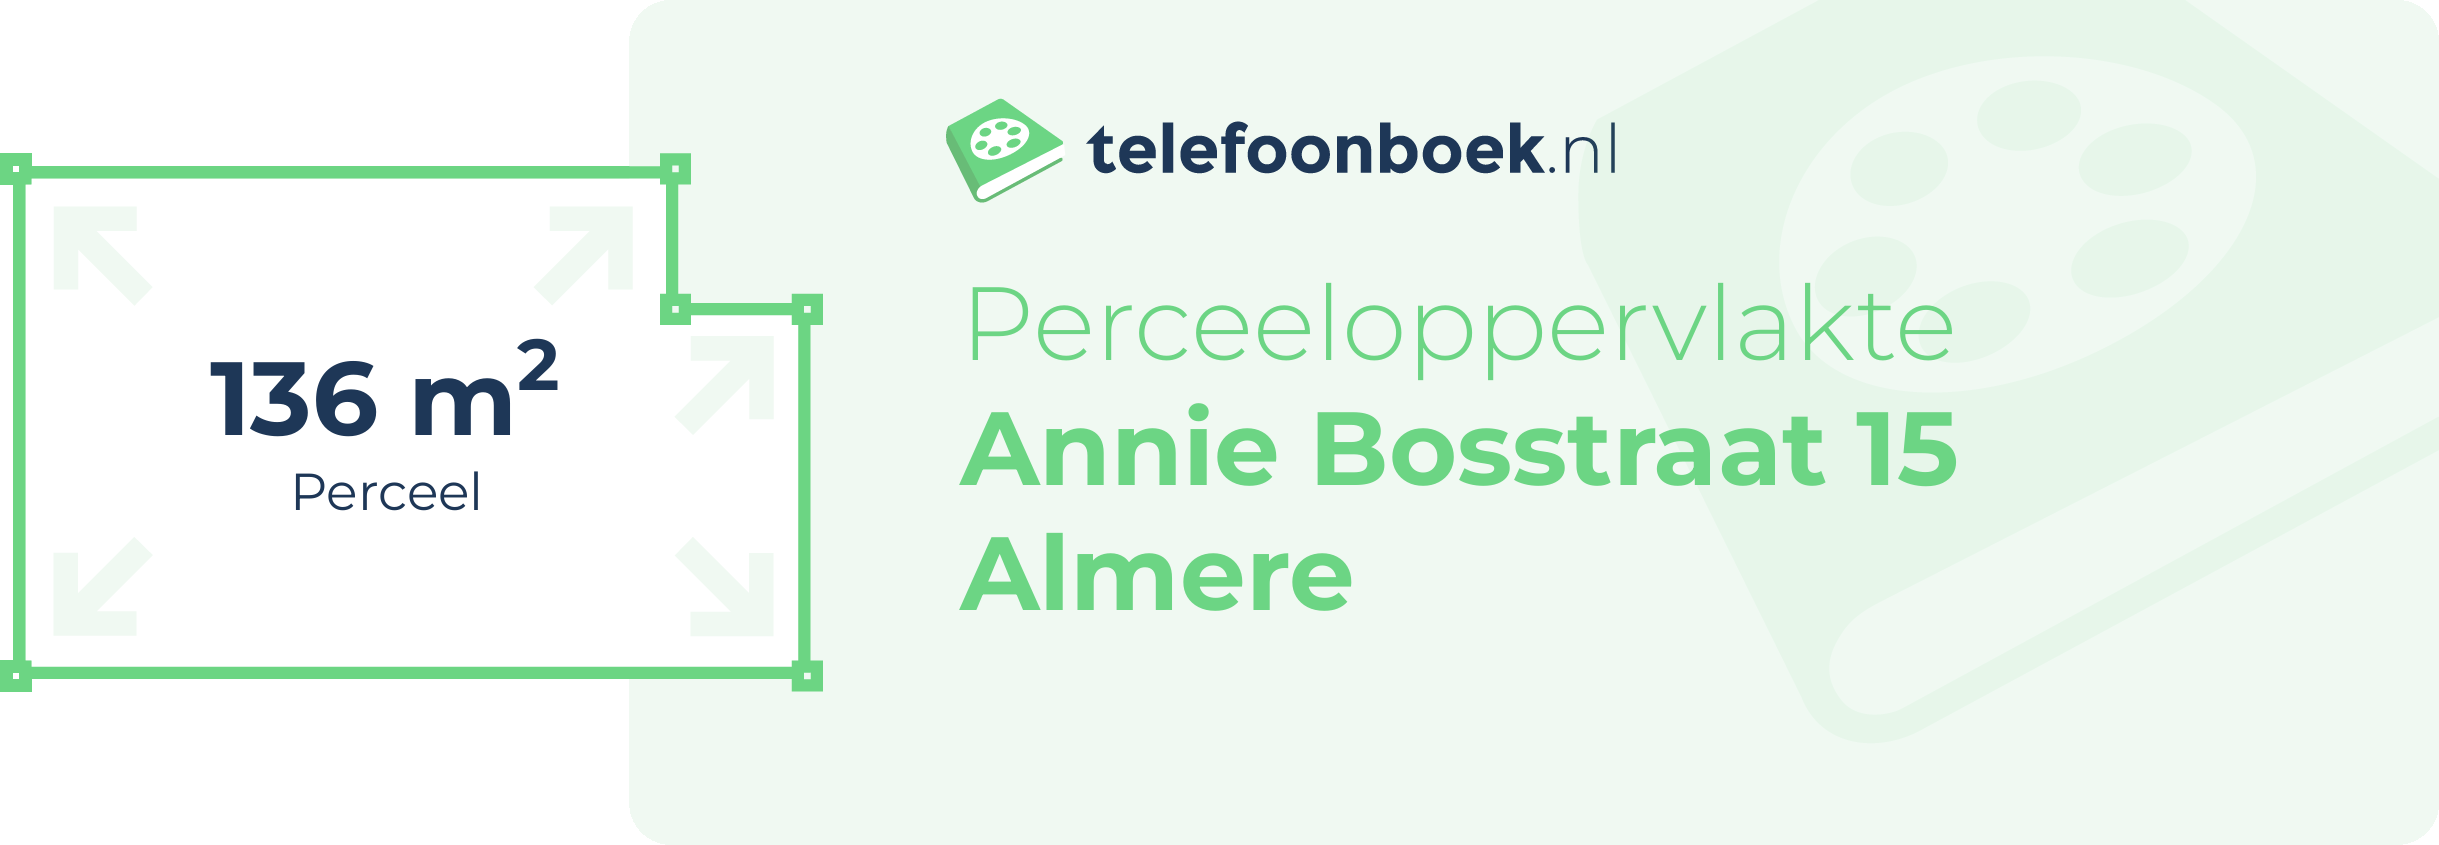 Perceeloppervlakte Annie Bosstraat 15 Almere